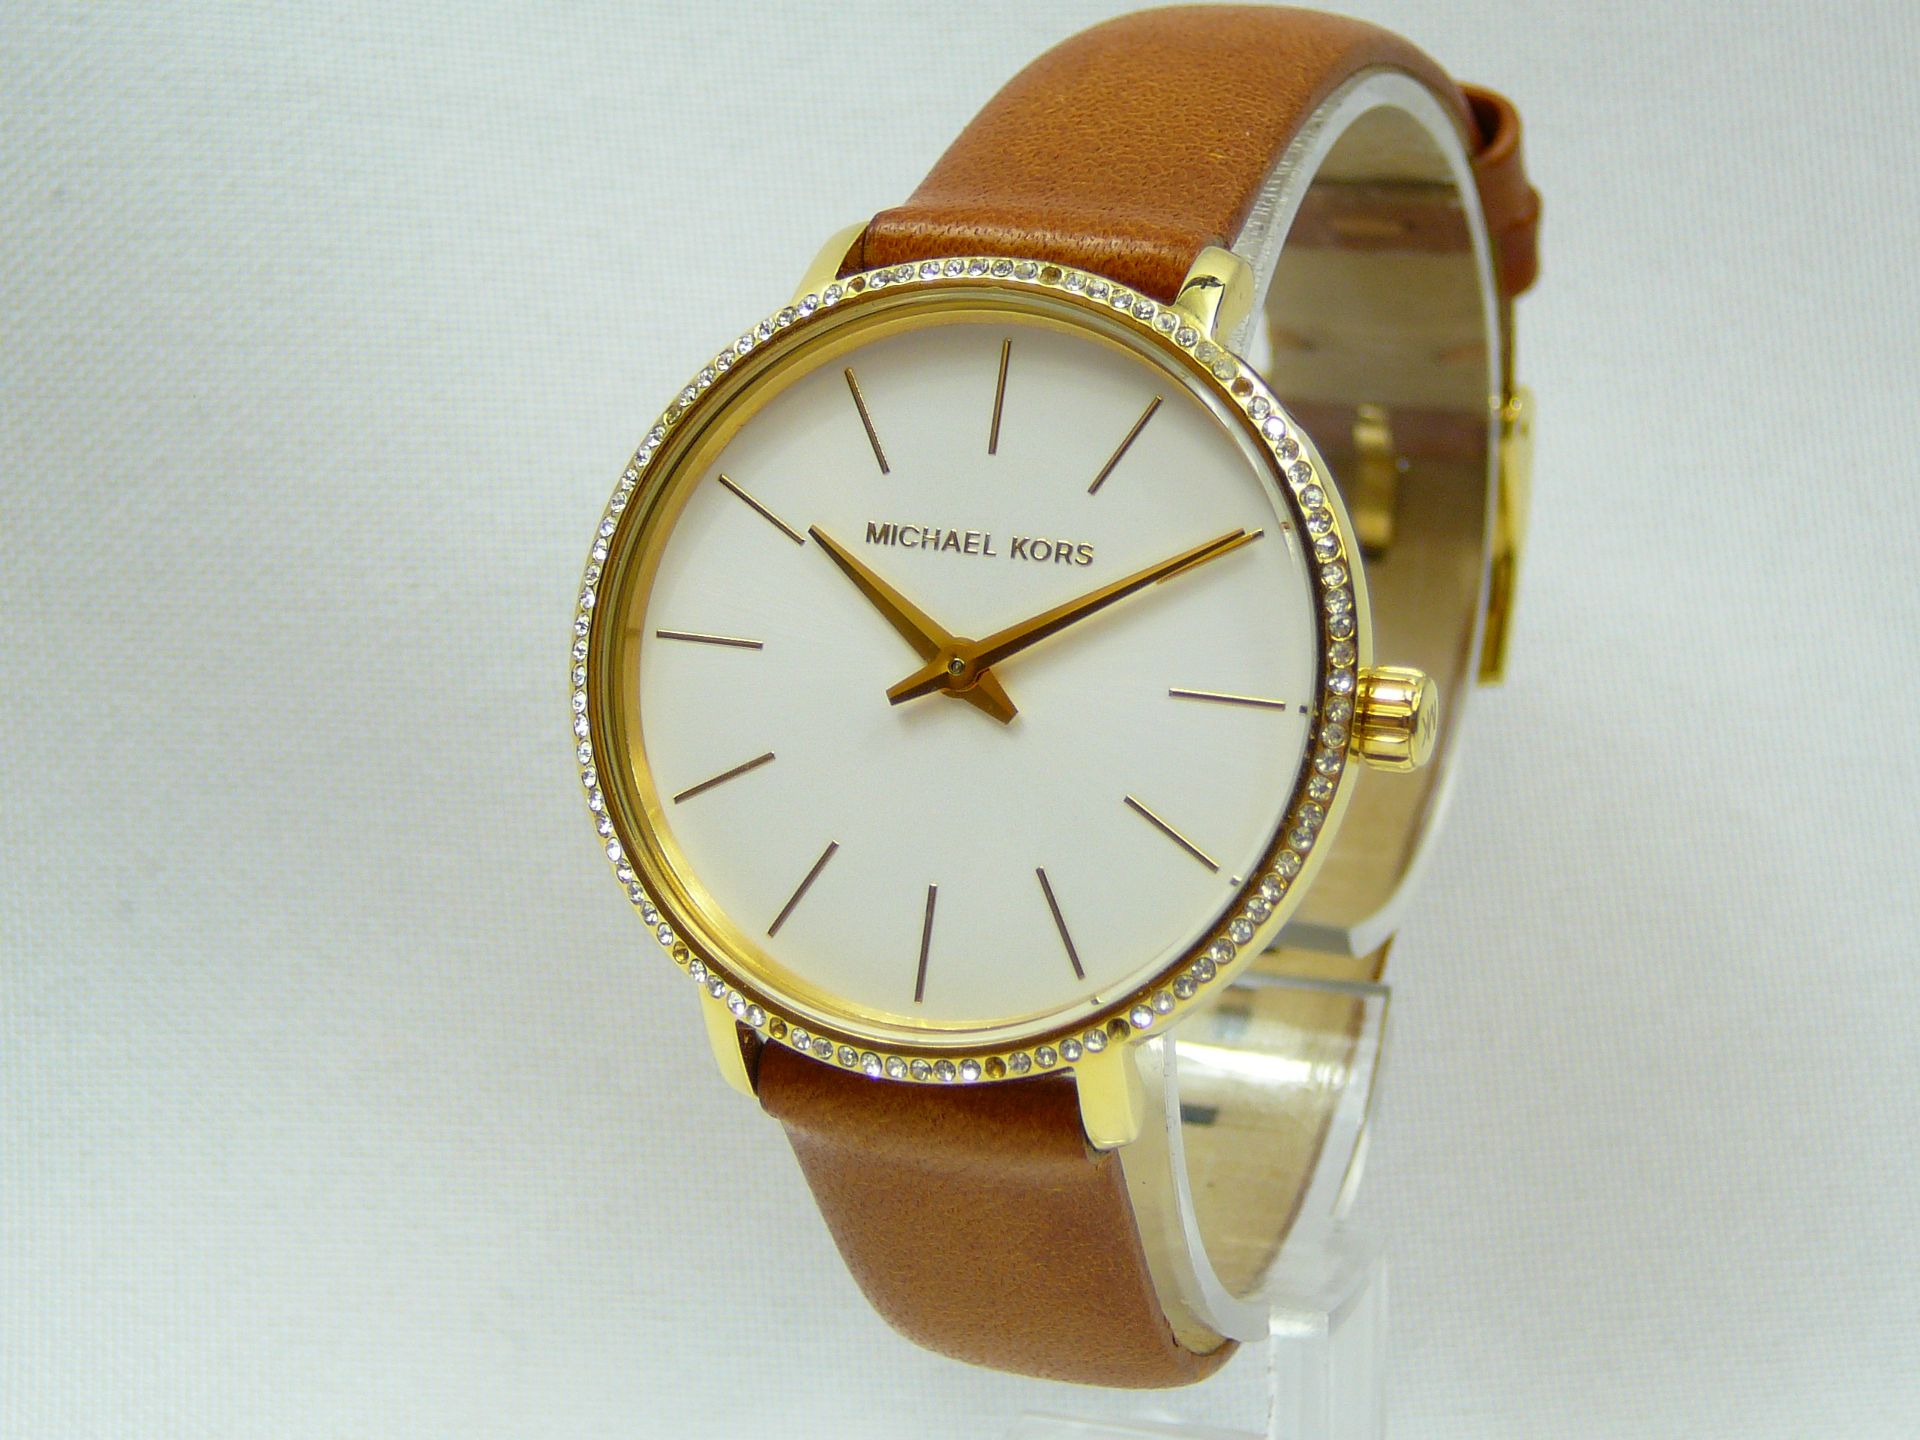 Ladies Michael Kors Wristwatch - Image 2 of 3